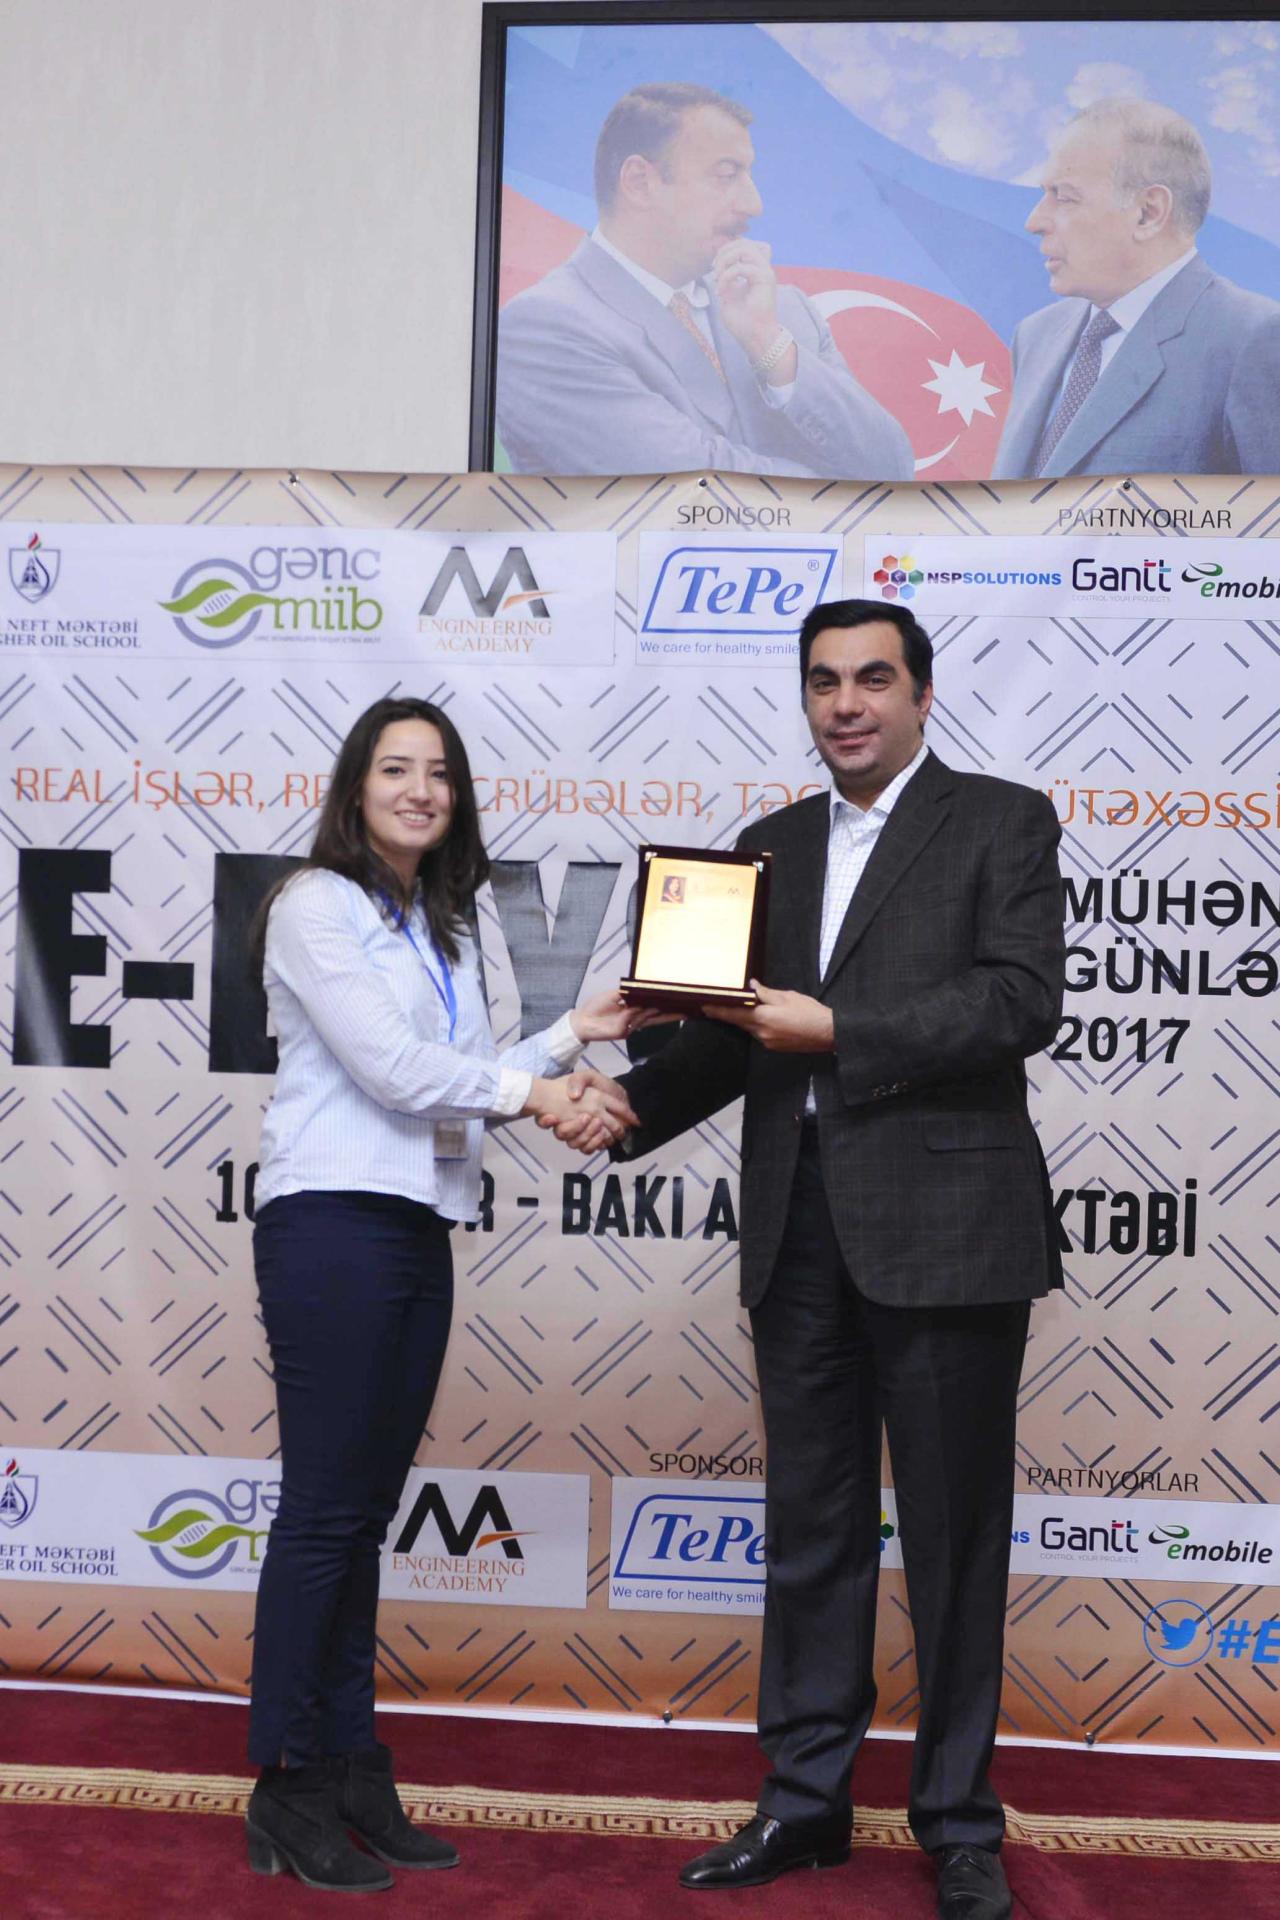 Baku Higher Oil School holds “Engineers Days 2017” event (PHOTO)